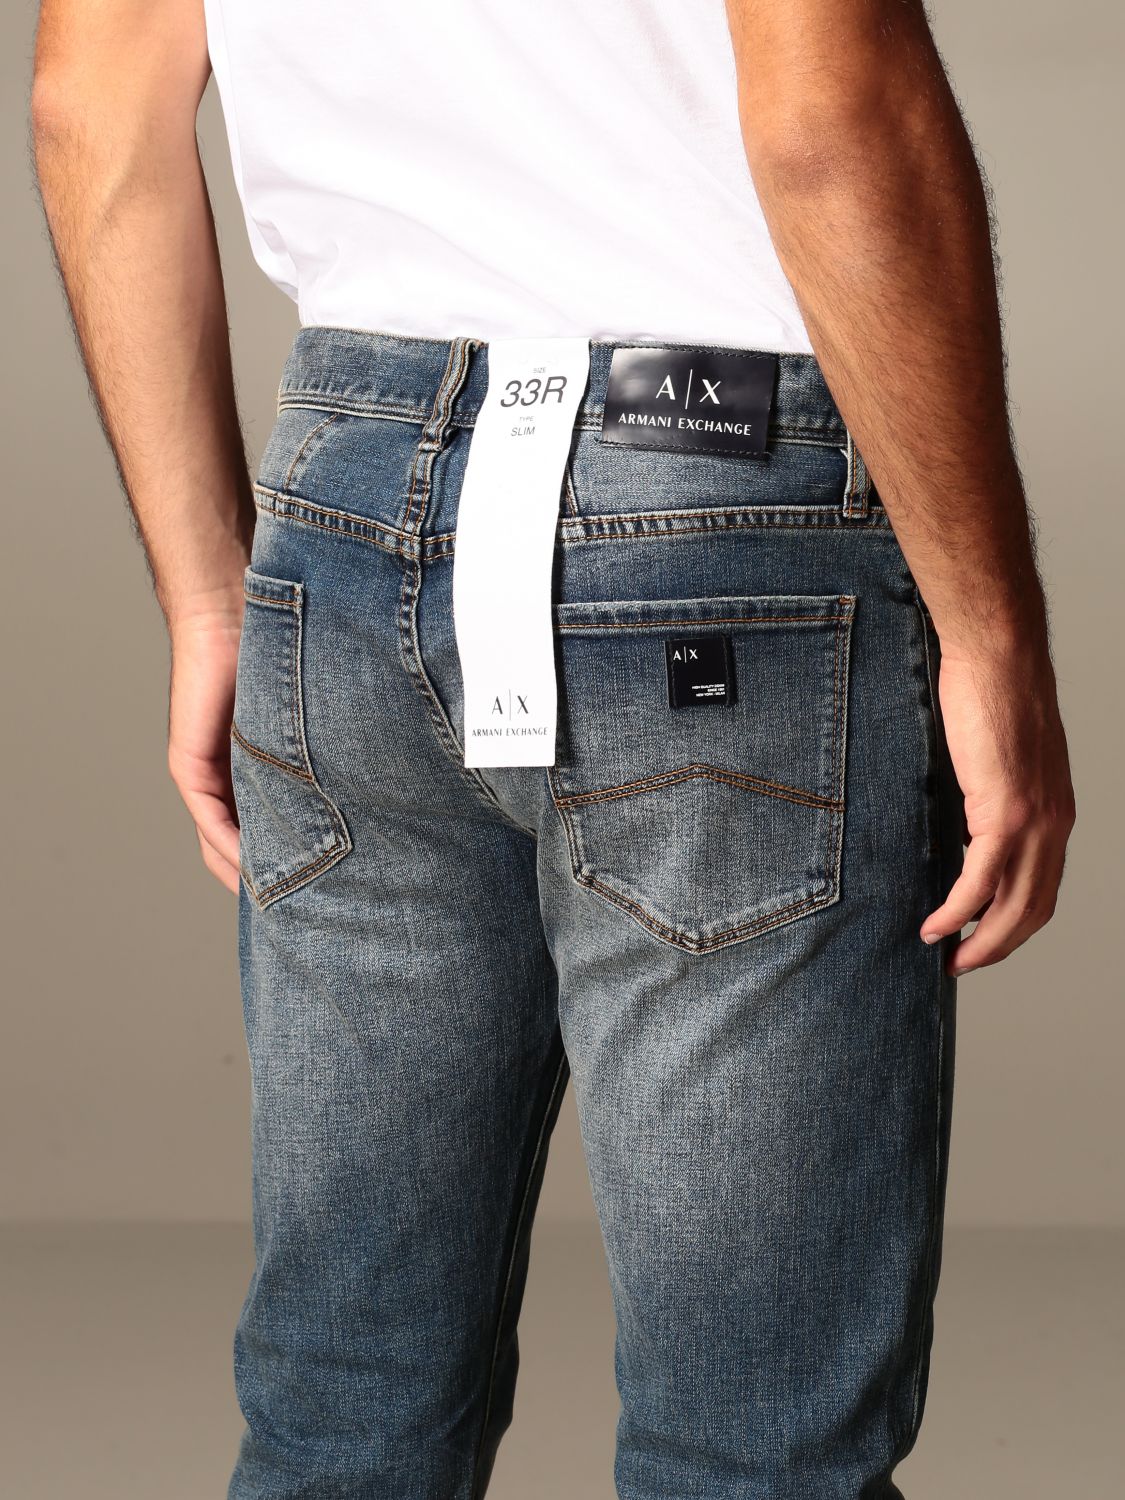 armani jeans exchange